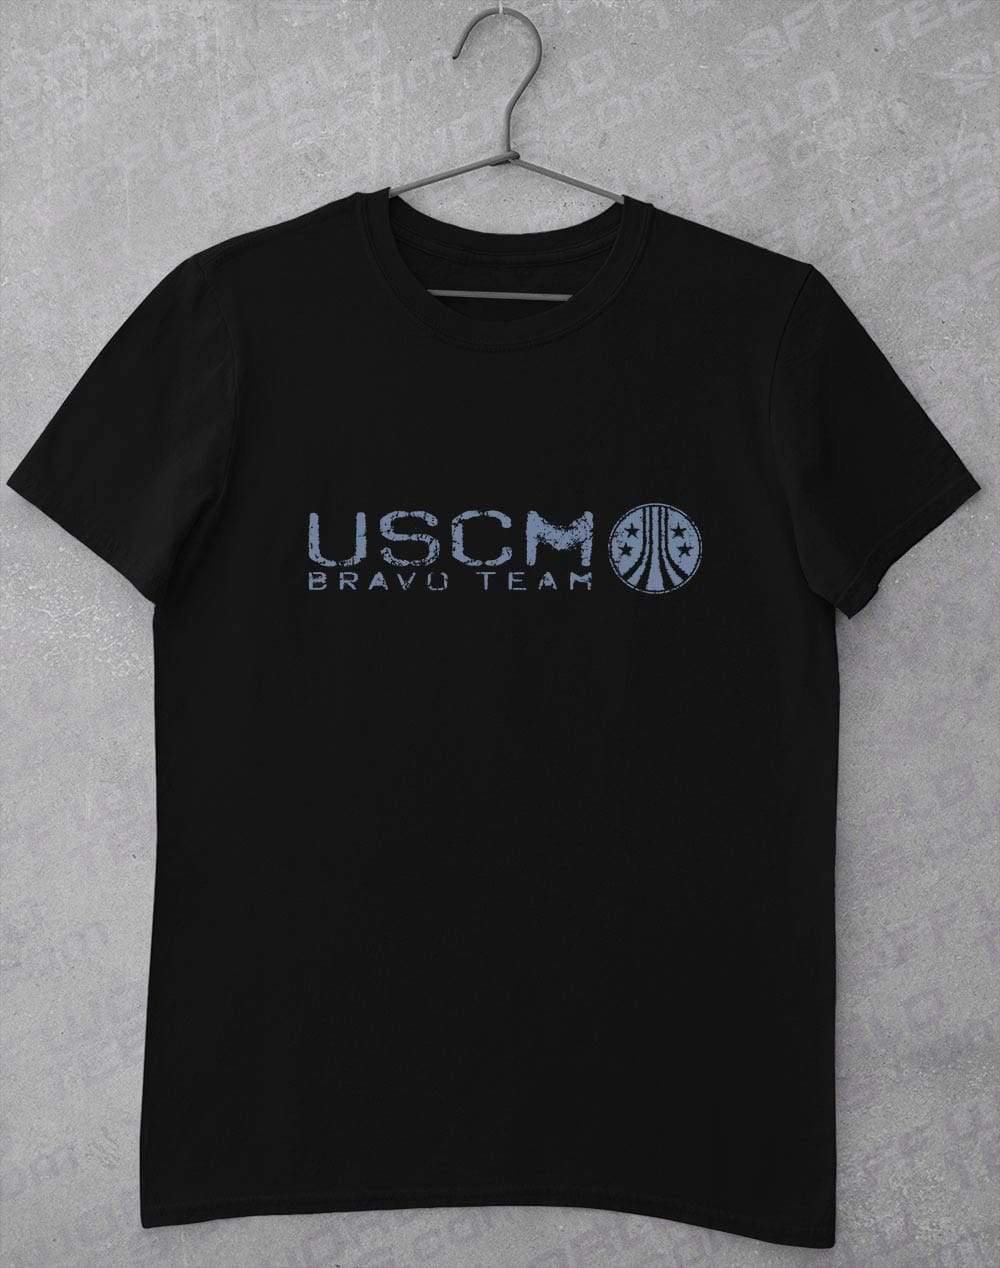 USCM Bravo Team T-Shirt S / Black  - Off World Tees